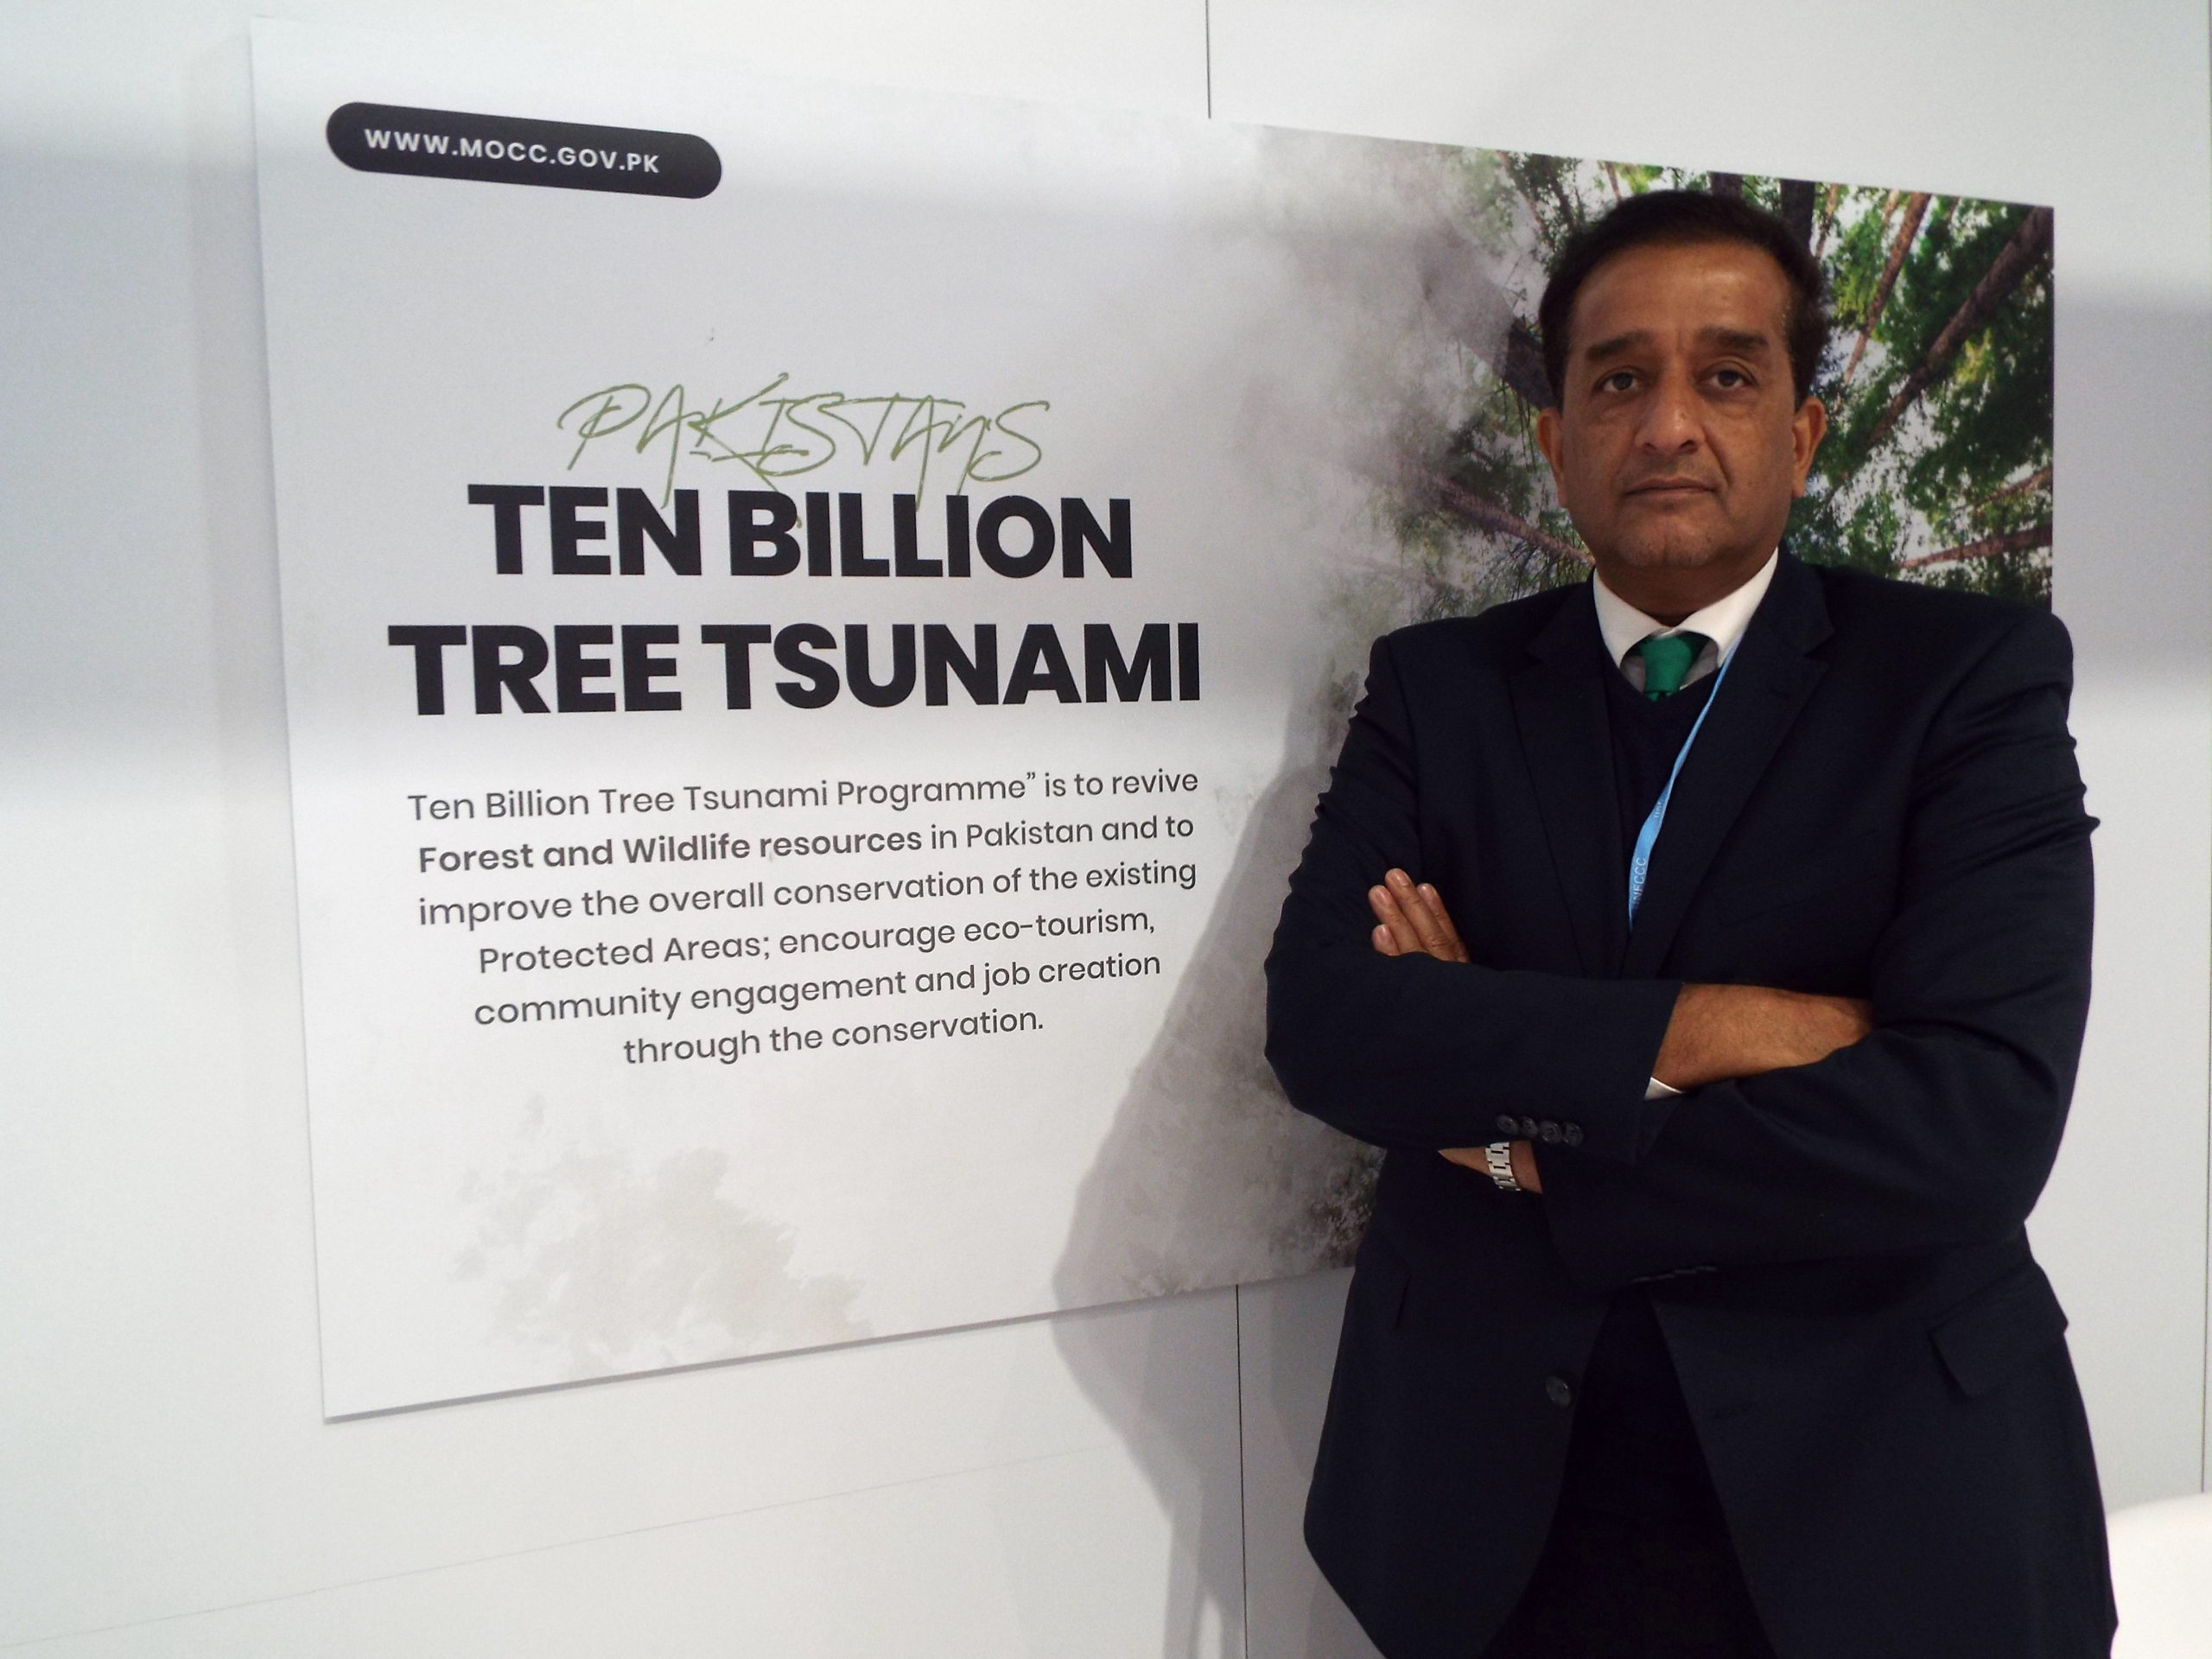 Pakistan’s de facto climate change minister Malik Amin Aslam at the Pakistan pavilion at COP26 (Image: The Third Pole)